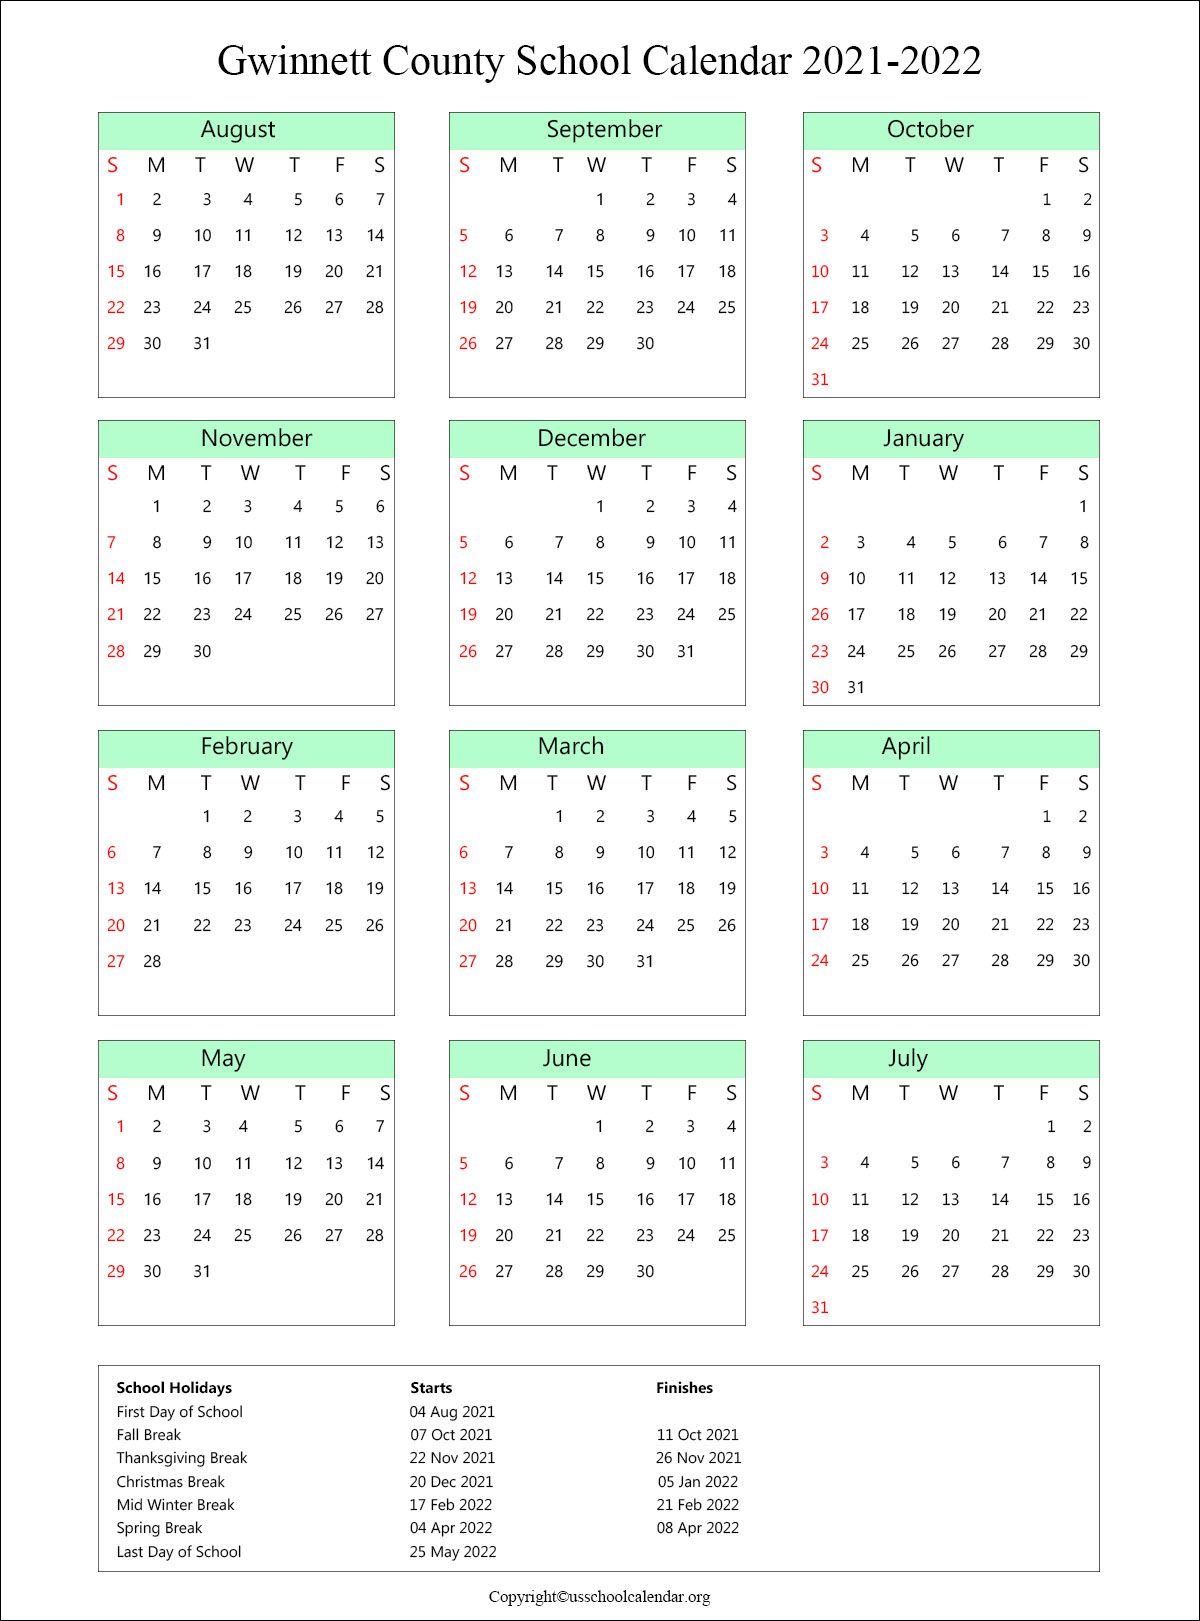 Gwinnett Calendar 2022 Gwinnett County School Calendar With Holidays 2021-2022